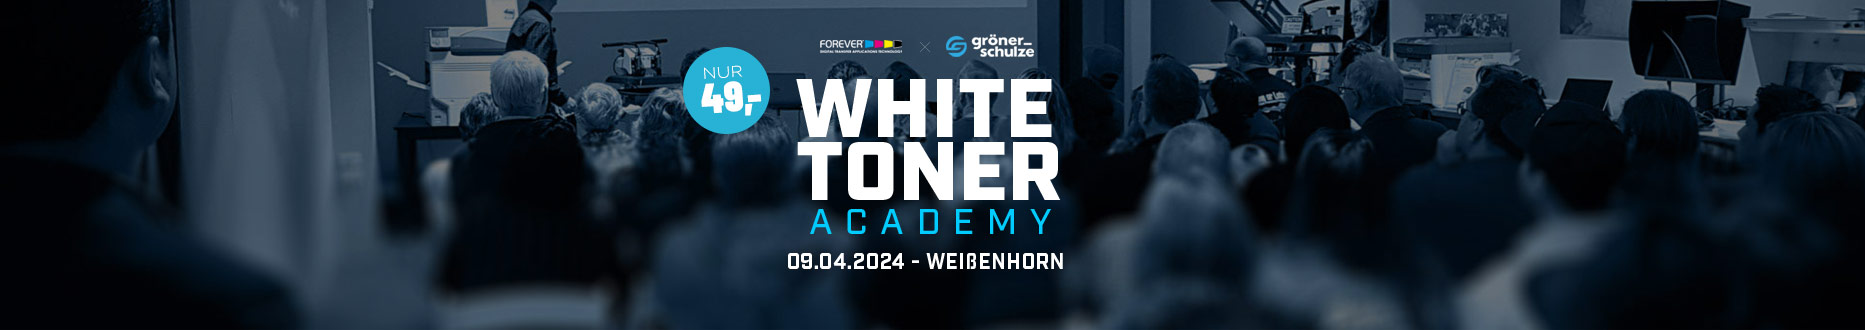 White Toner Academy - 09.04.2024